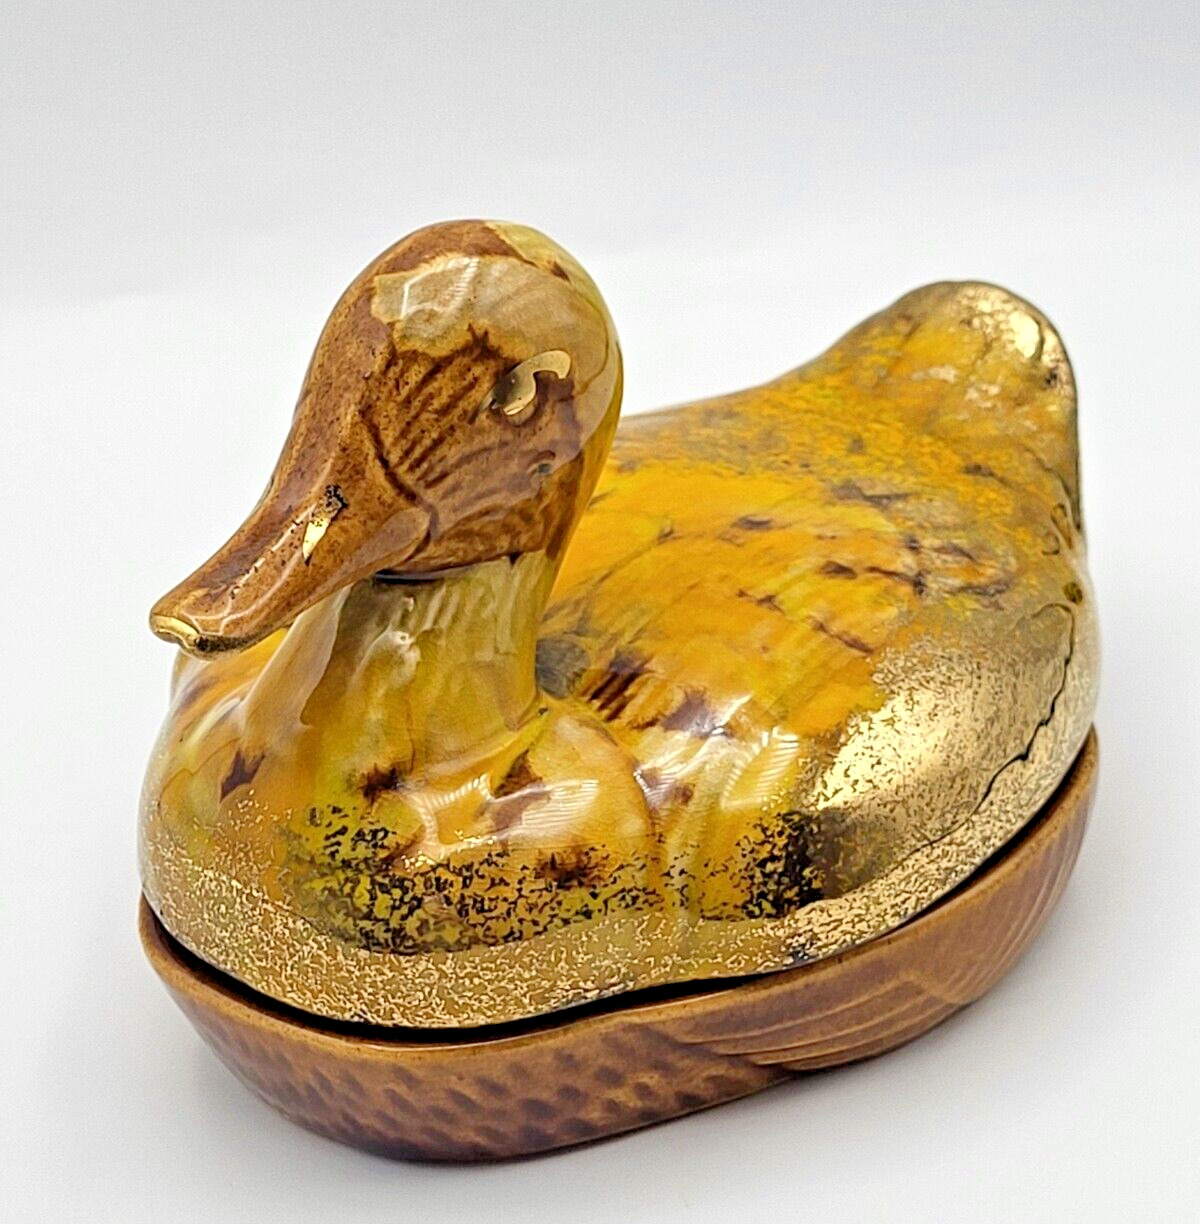 California Originals Pottery Beautiful Glazed Duck w/ Lid Trinket Dish MCM Decor